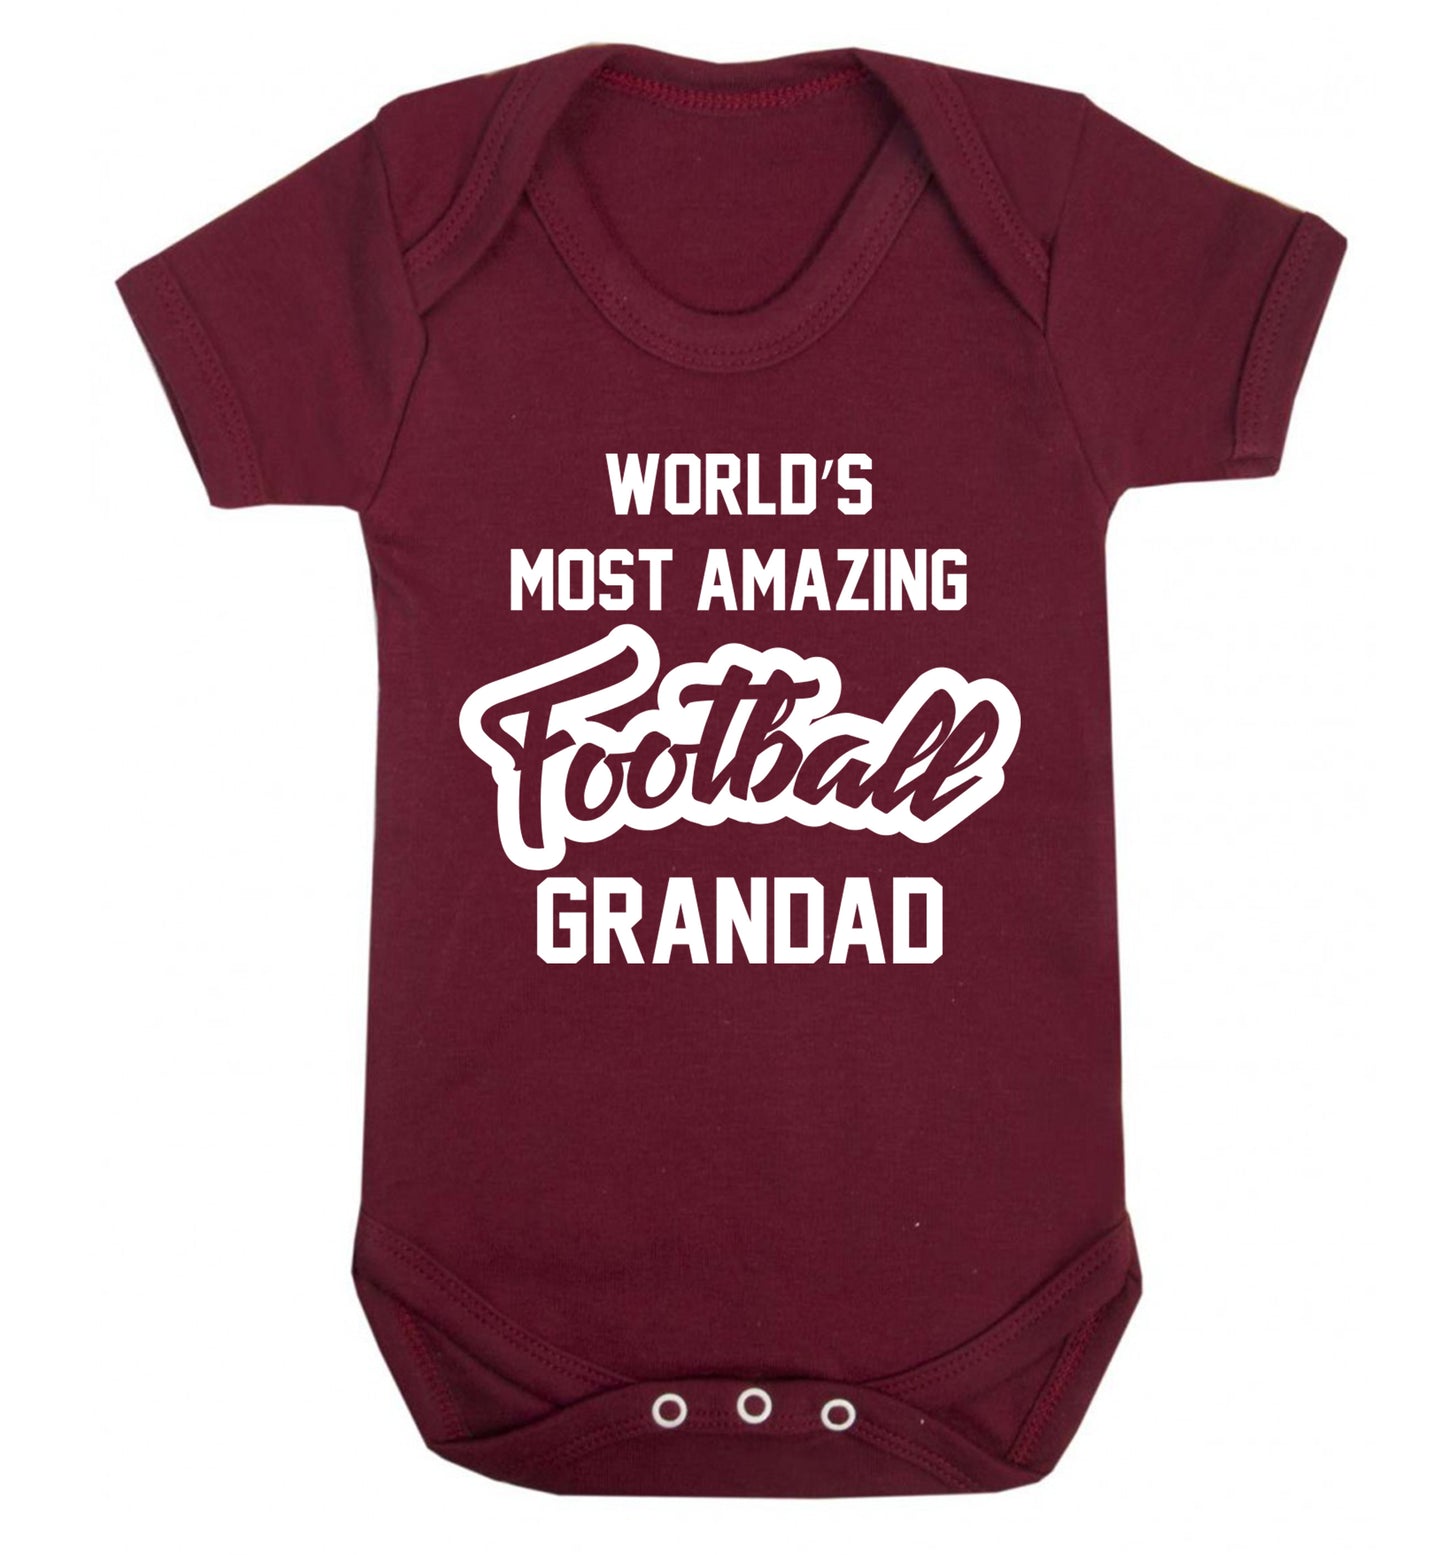 Worlds most amazing football grandad Baby Vest maroon 18-24 months